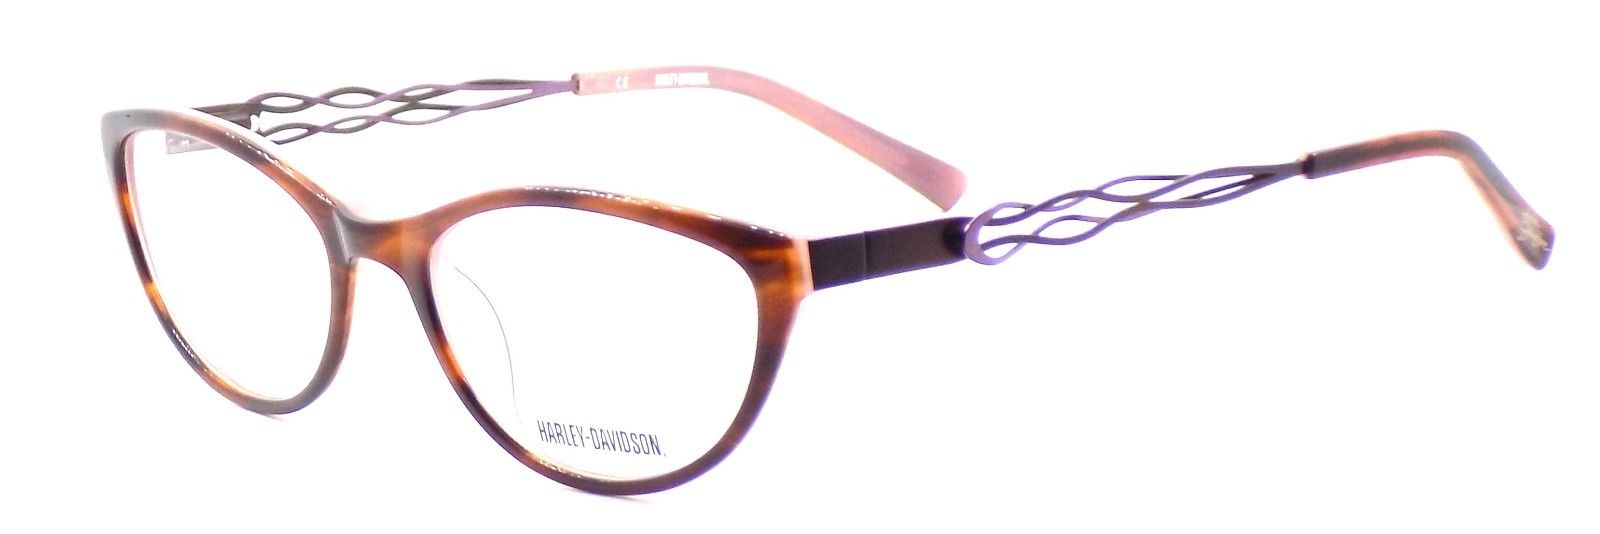 1-Harley Davidson HD513 DPK Women's Eyeglasses Frames 51-17-135 Brown / Pink +Case-715583766396-IKSpecs